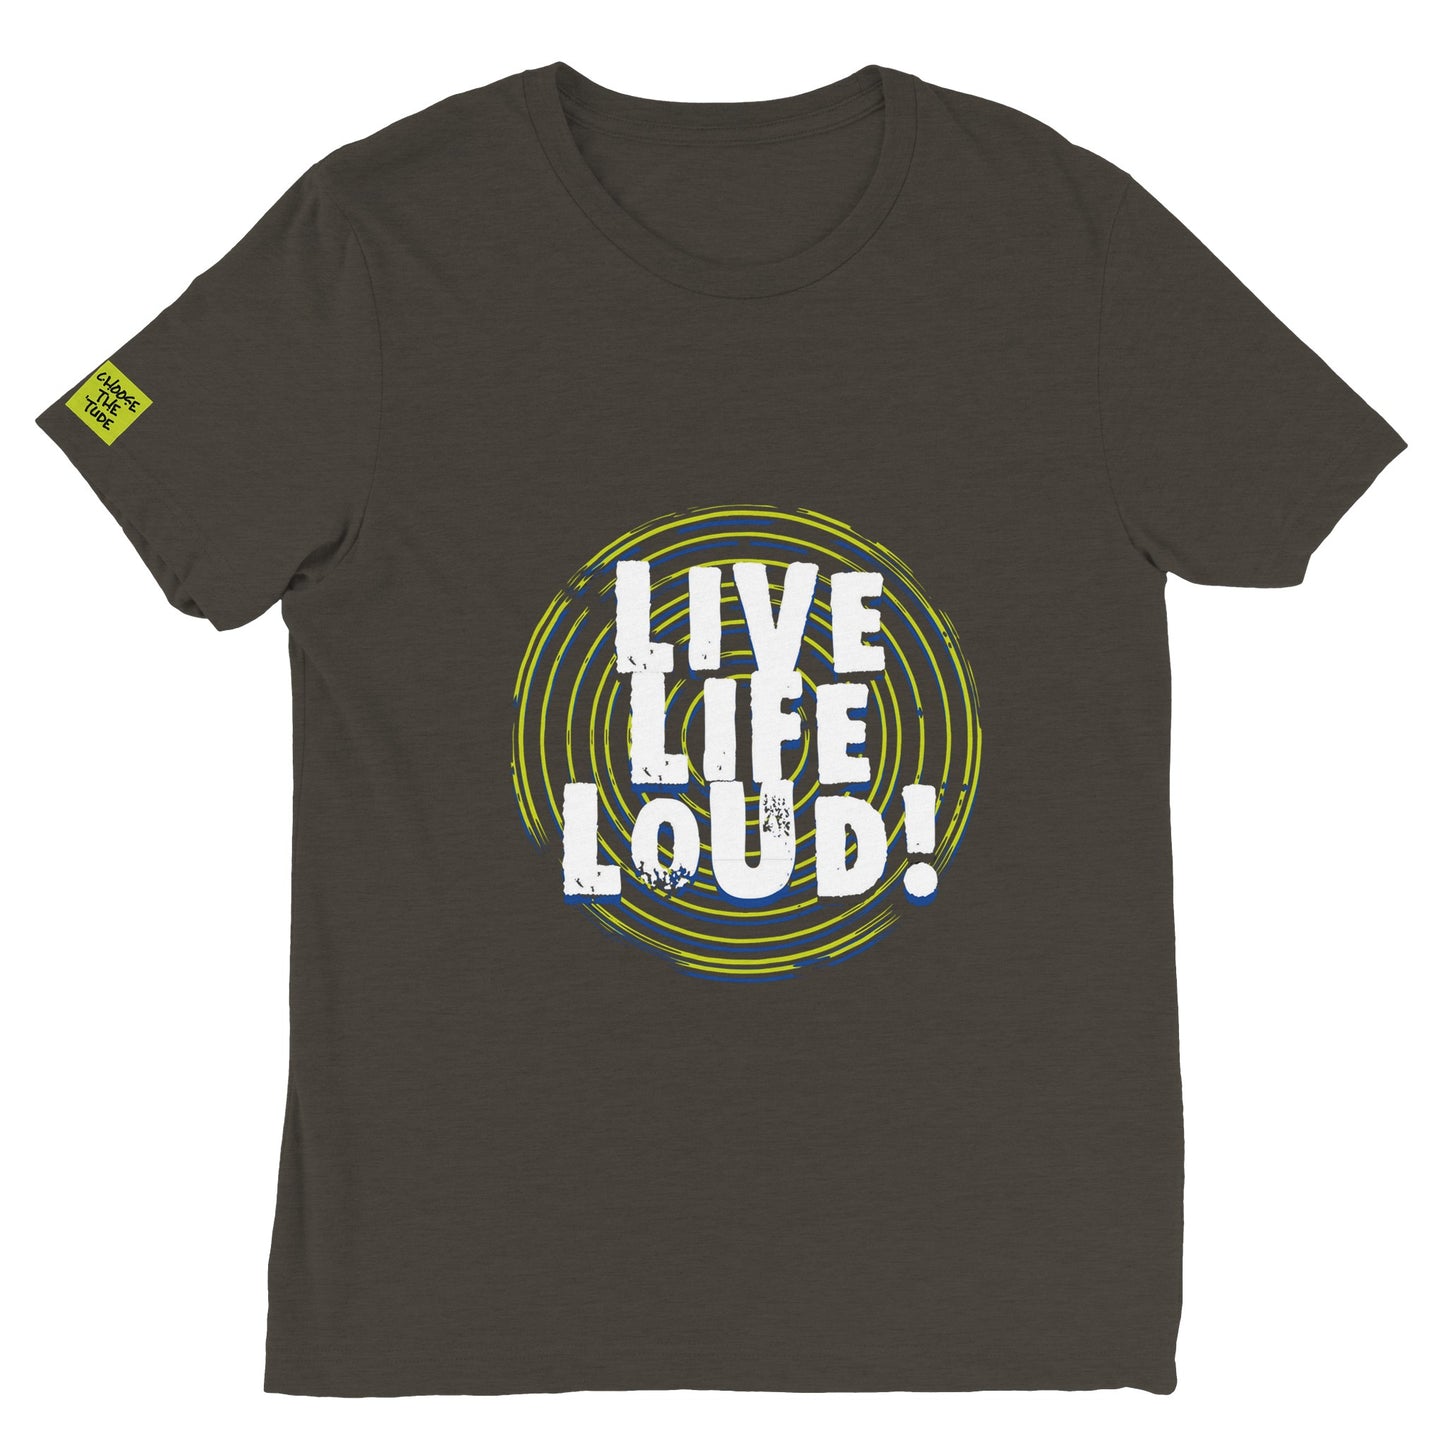 Live Life Loud Green Triblend Unisex Crewneck T-shirt